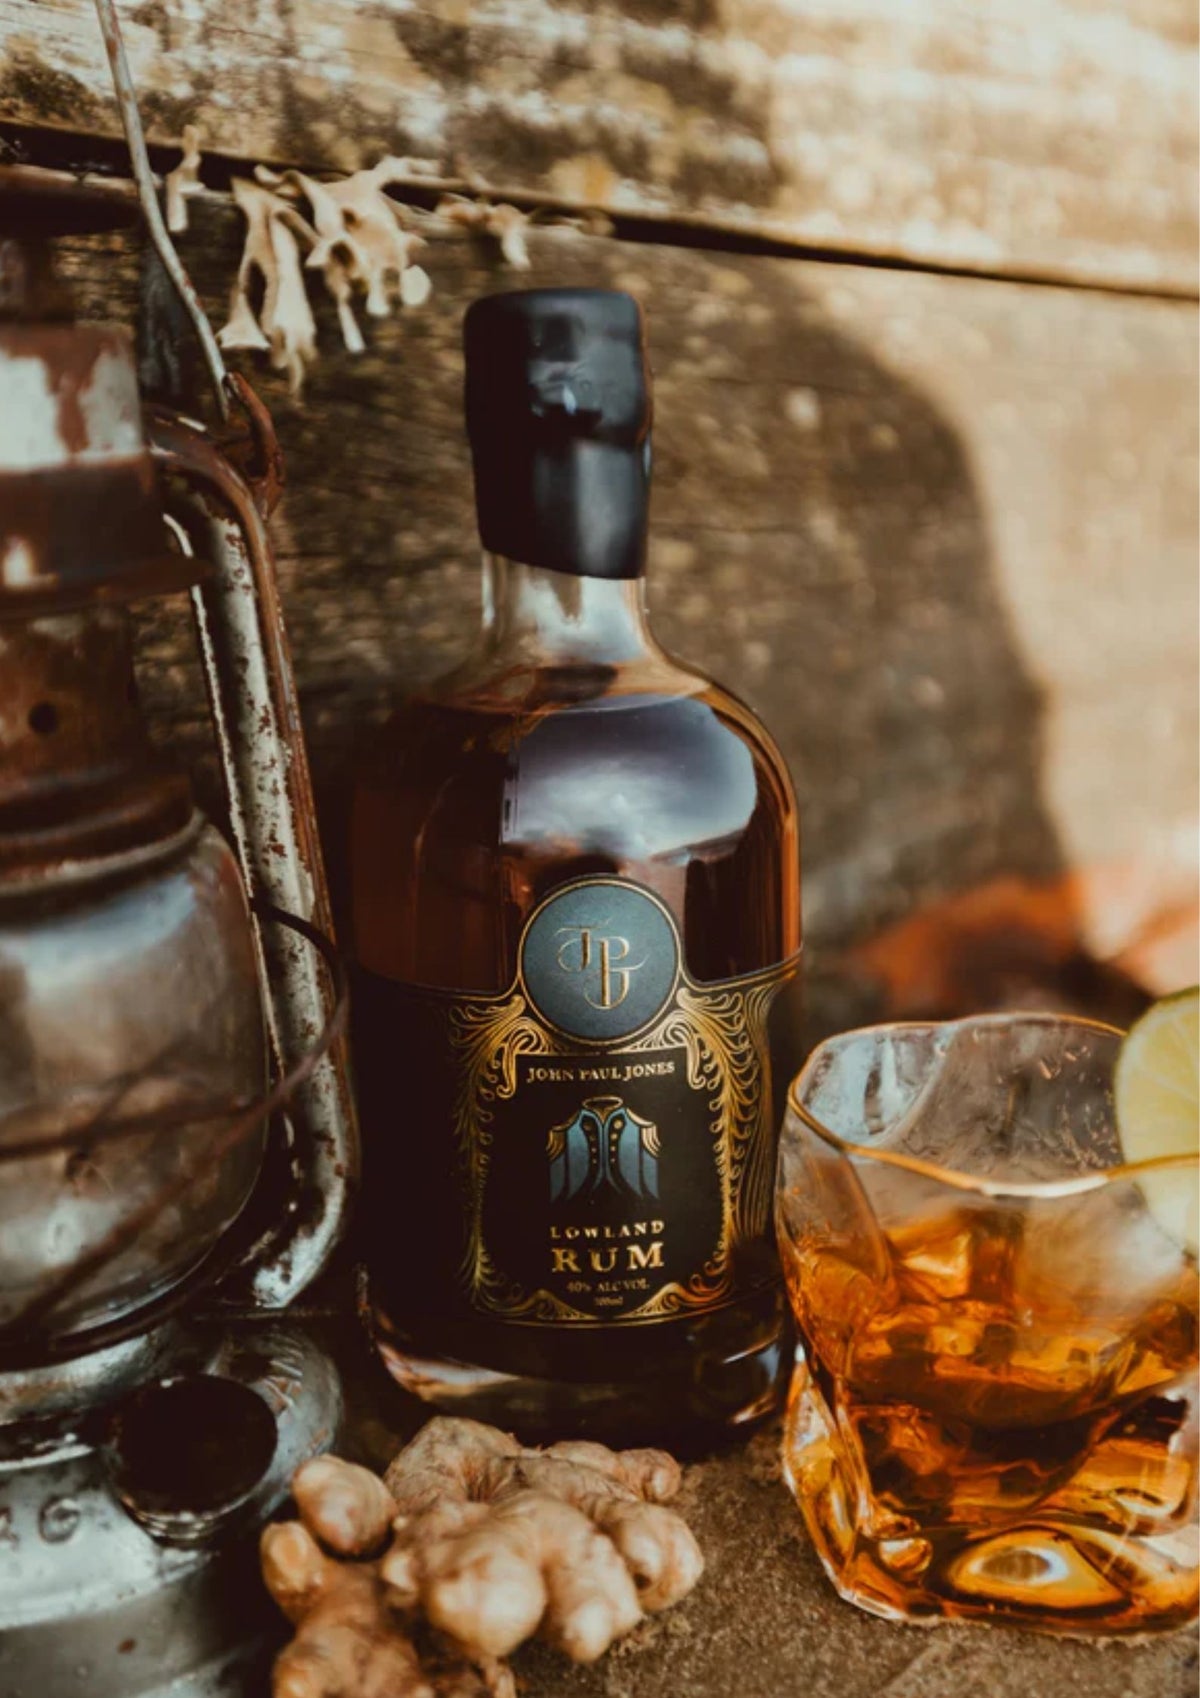 John Paul Jones Lowland Rum, 40%